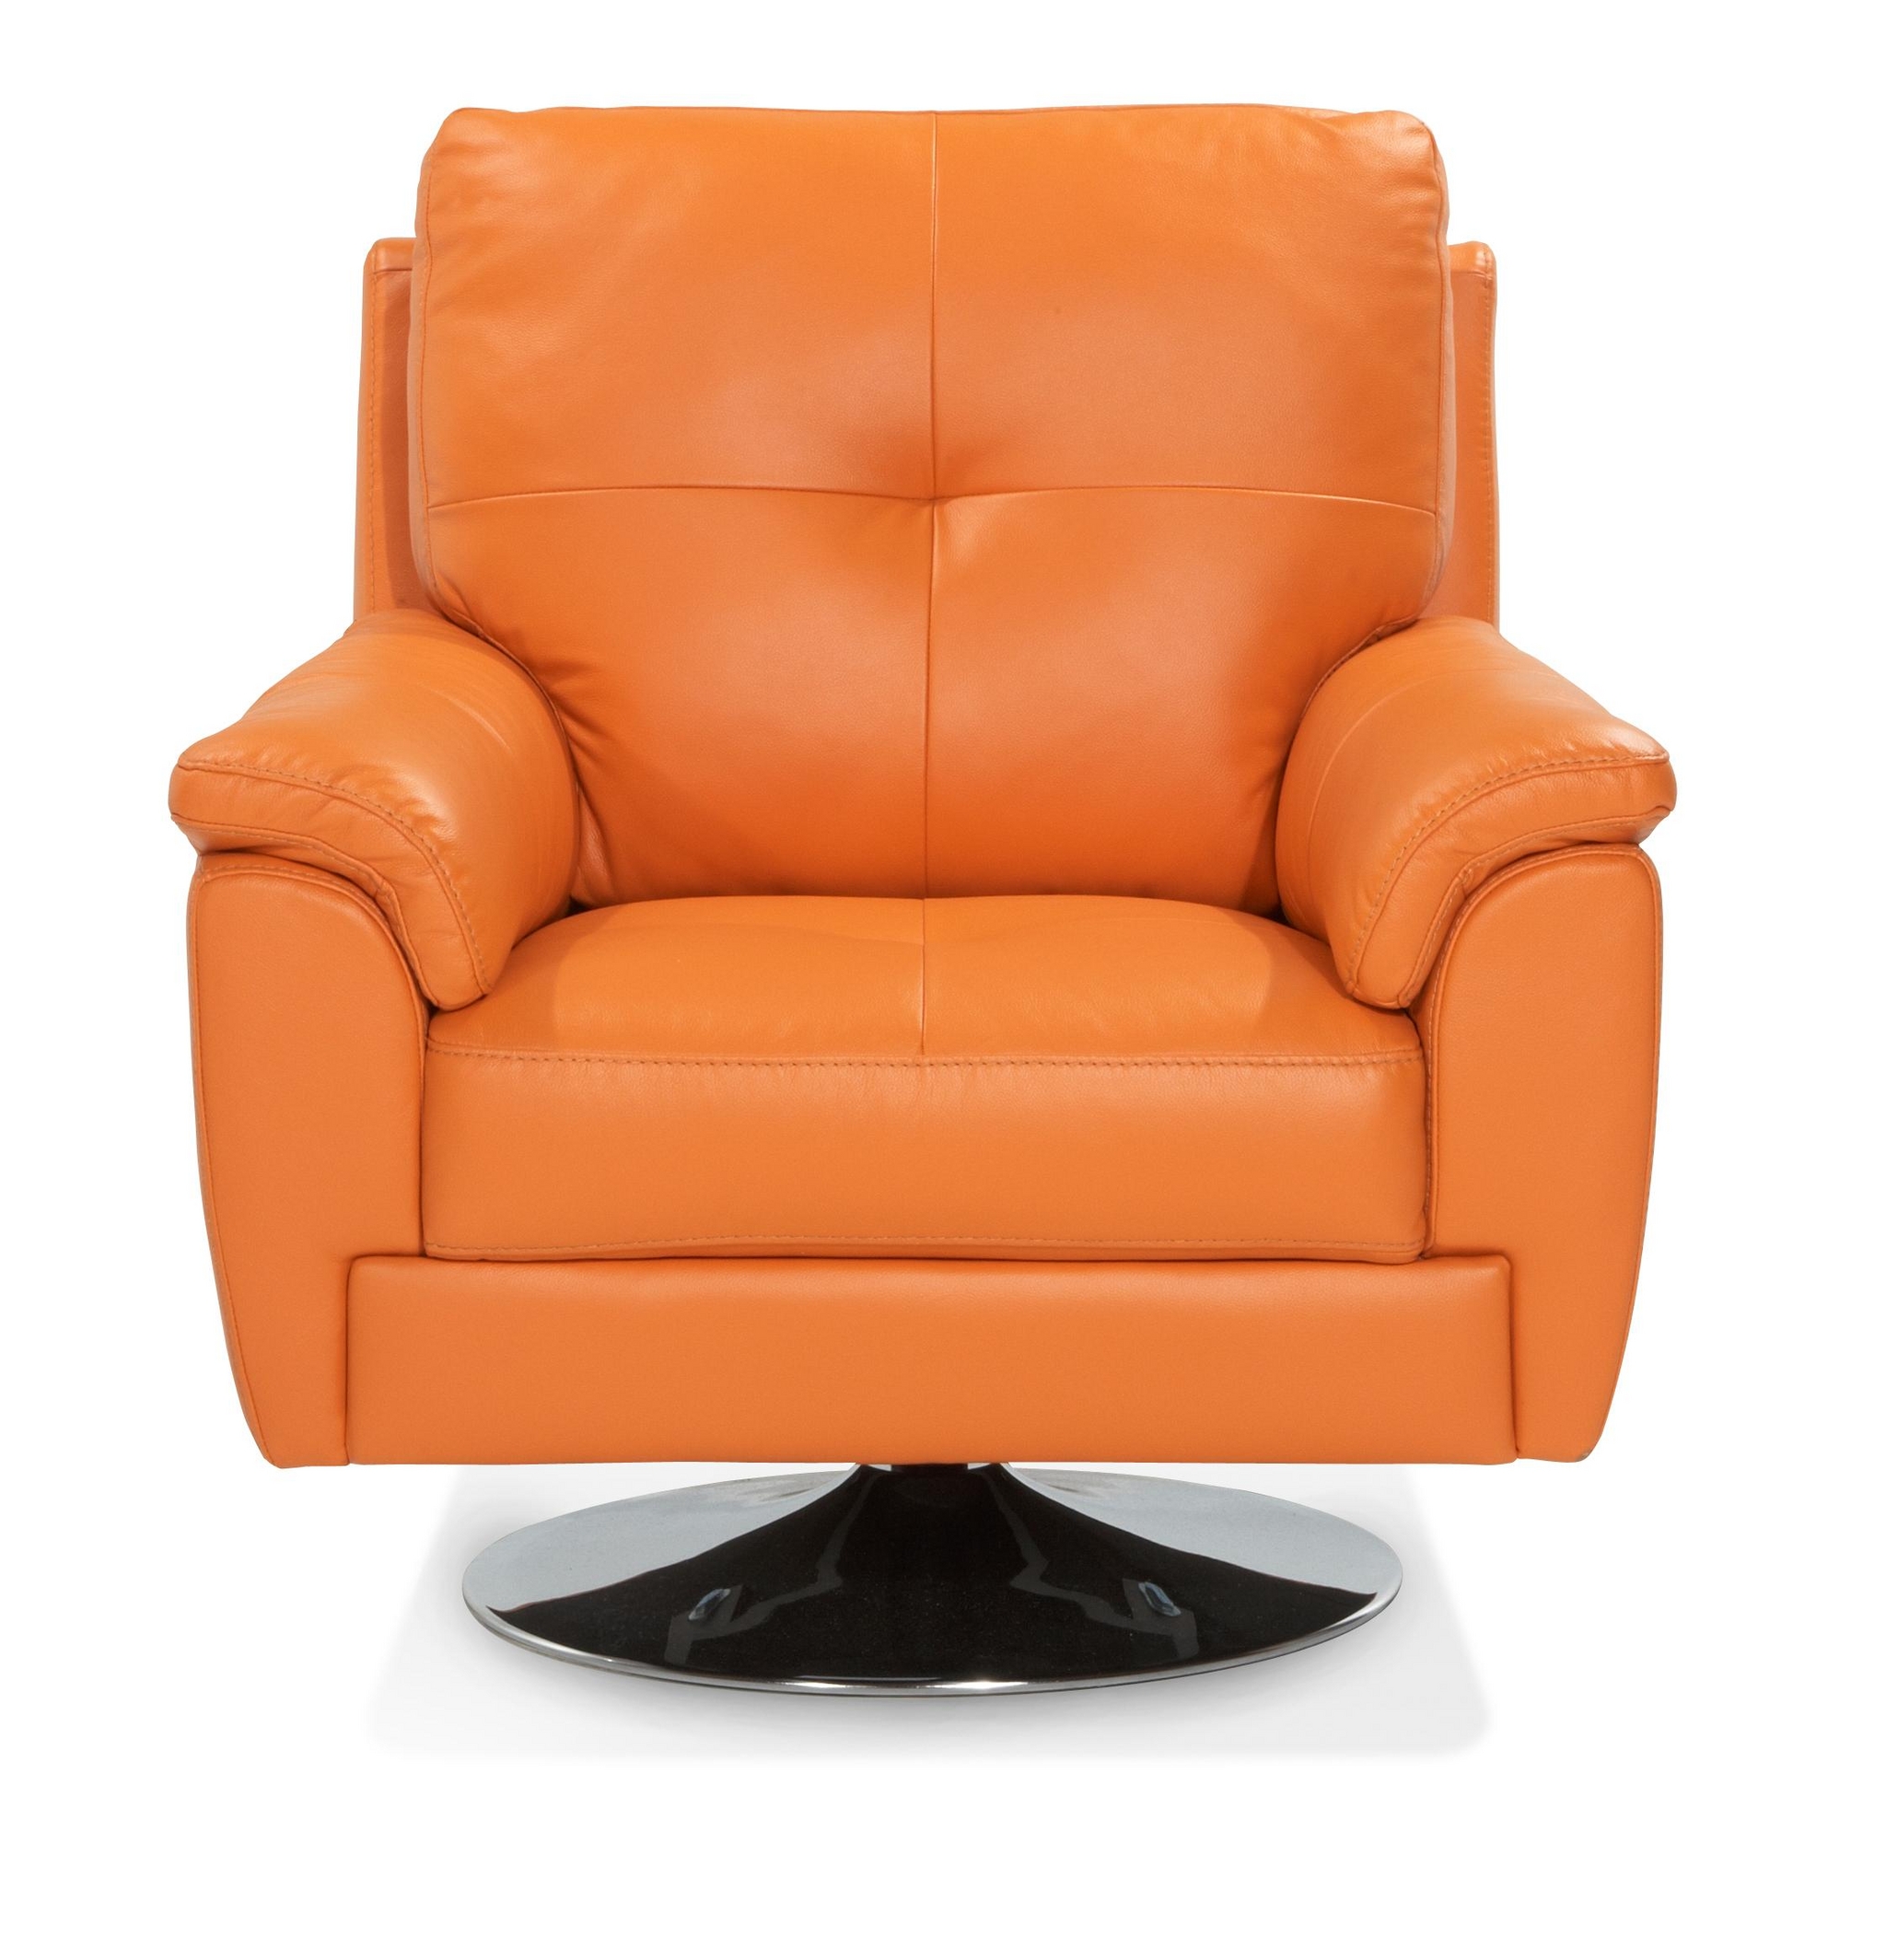 Orange Leather Chairs / Safavieh Jonika Orange Leather